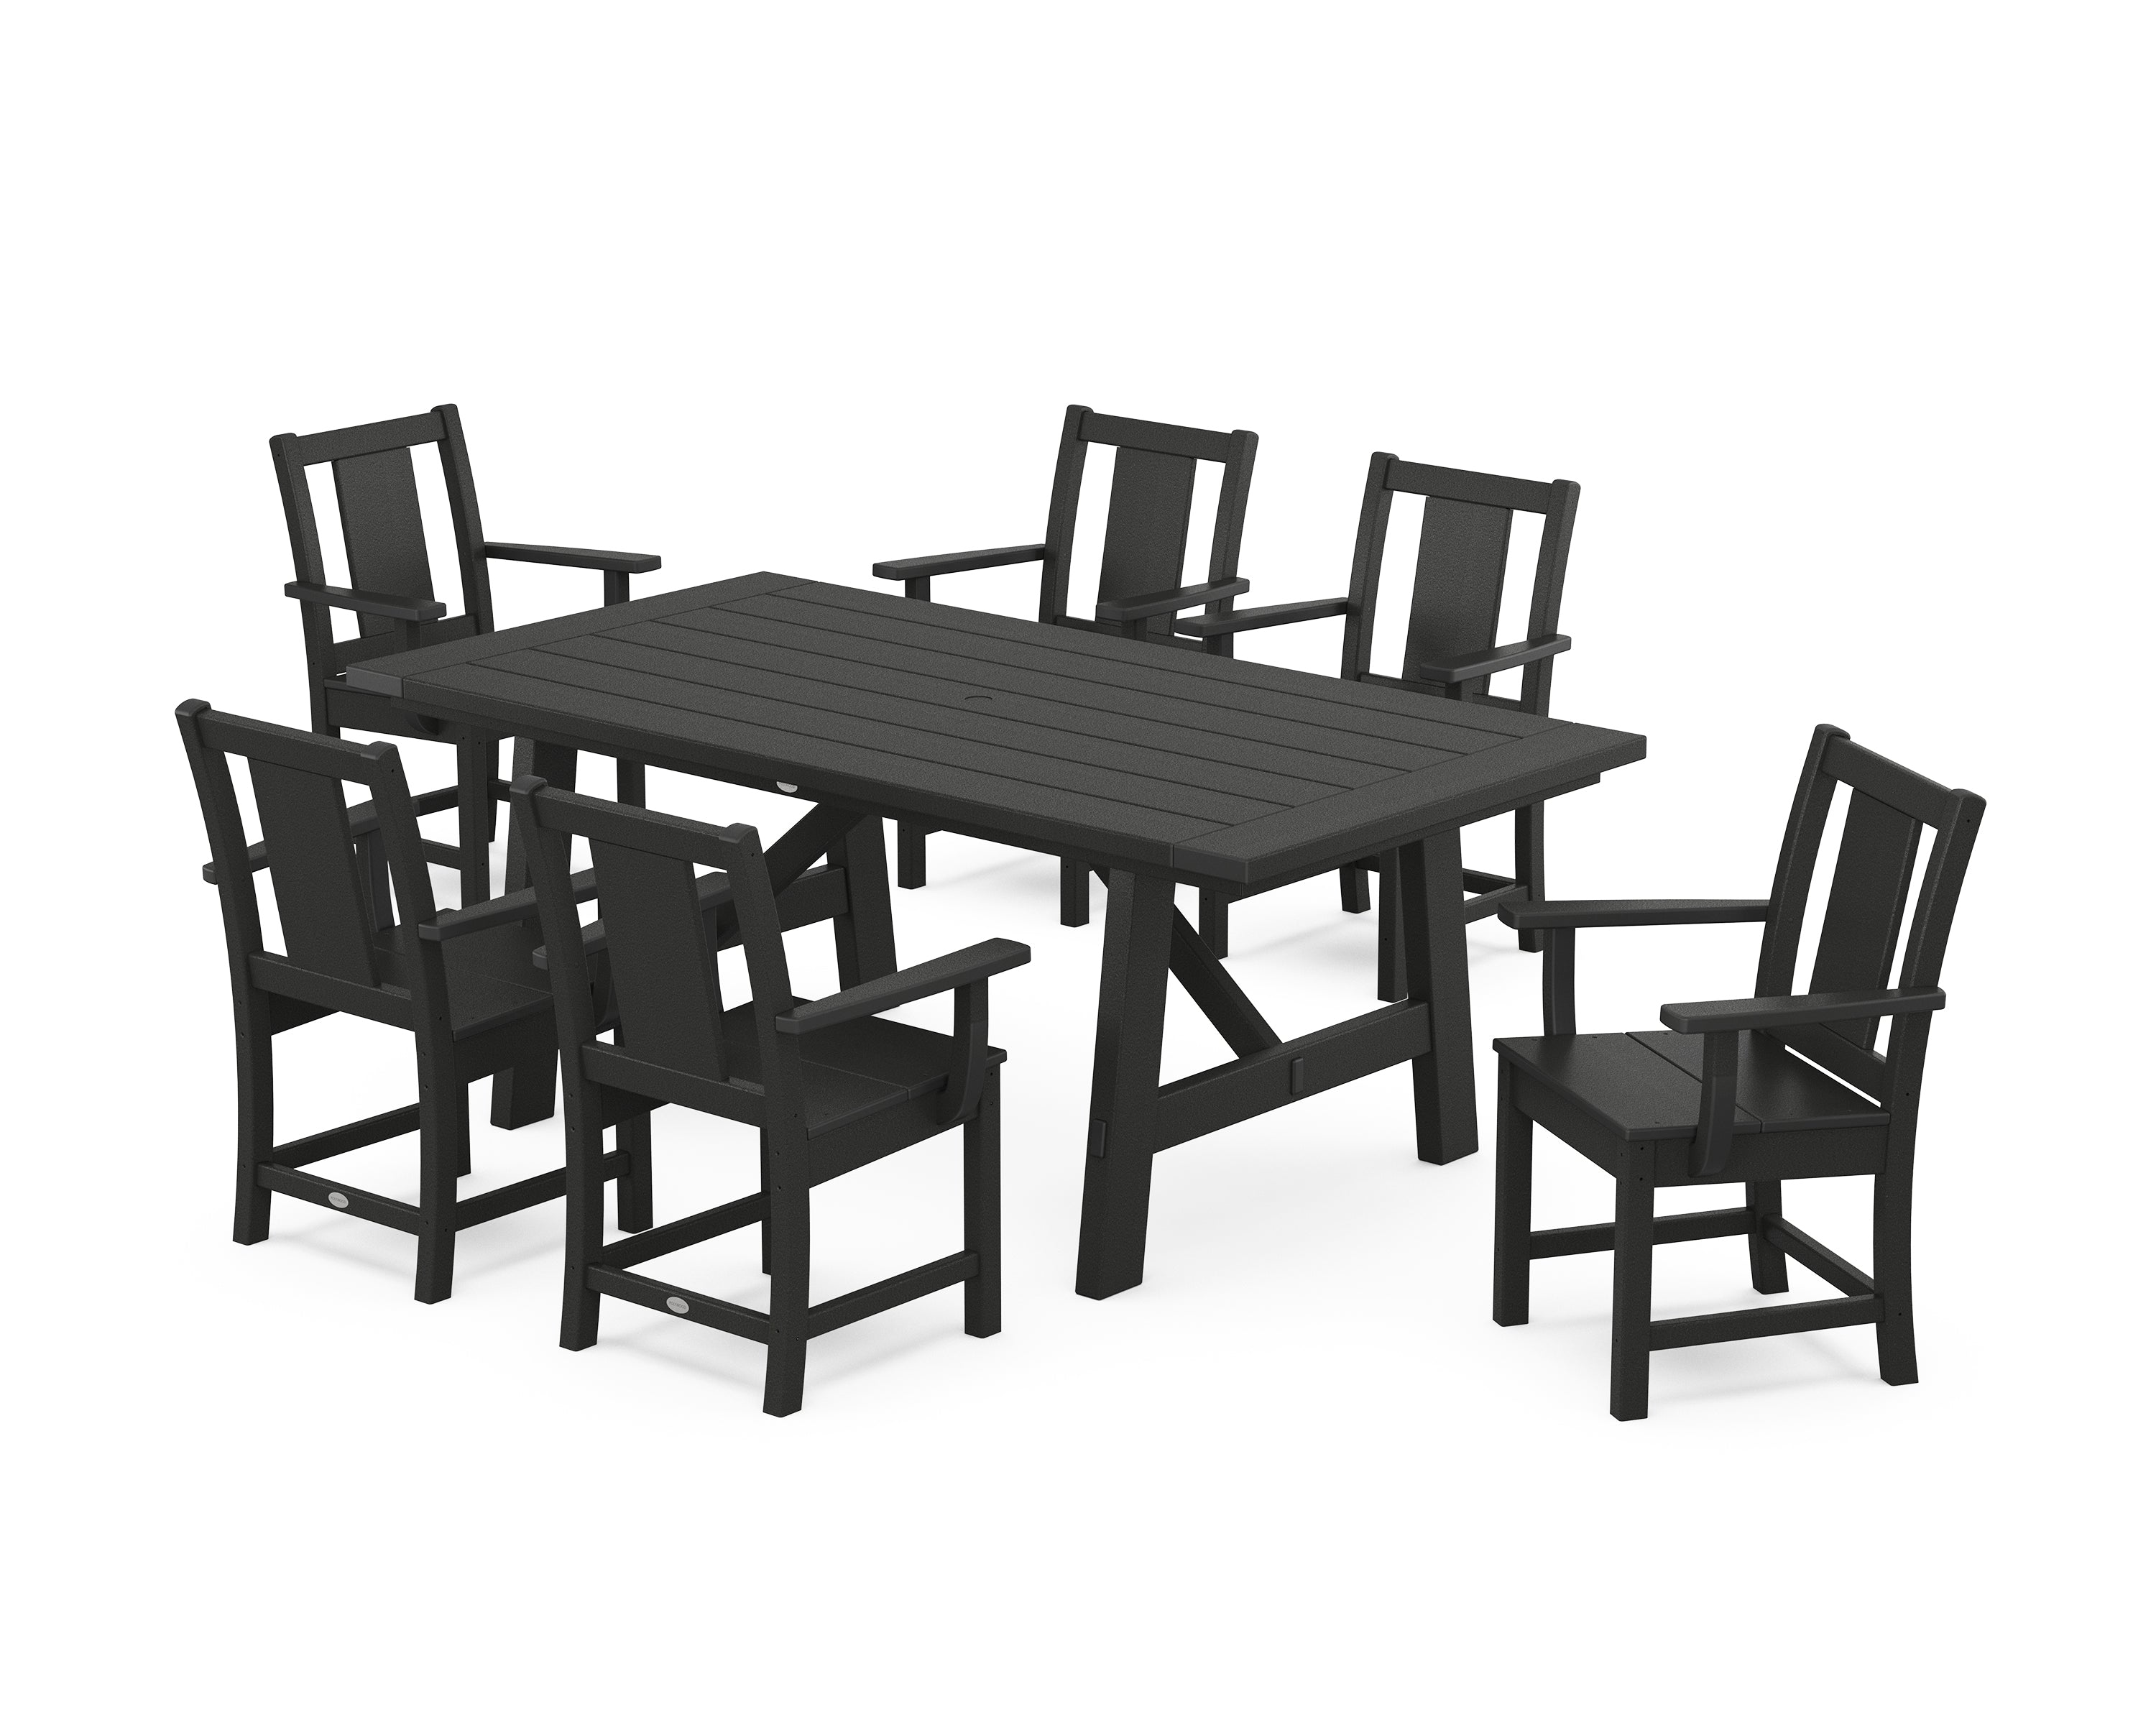 POLYWOOD® Prairie Arm Chair 7-Piece Rustic Farmhouse Dining Set in Black